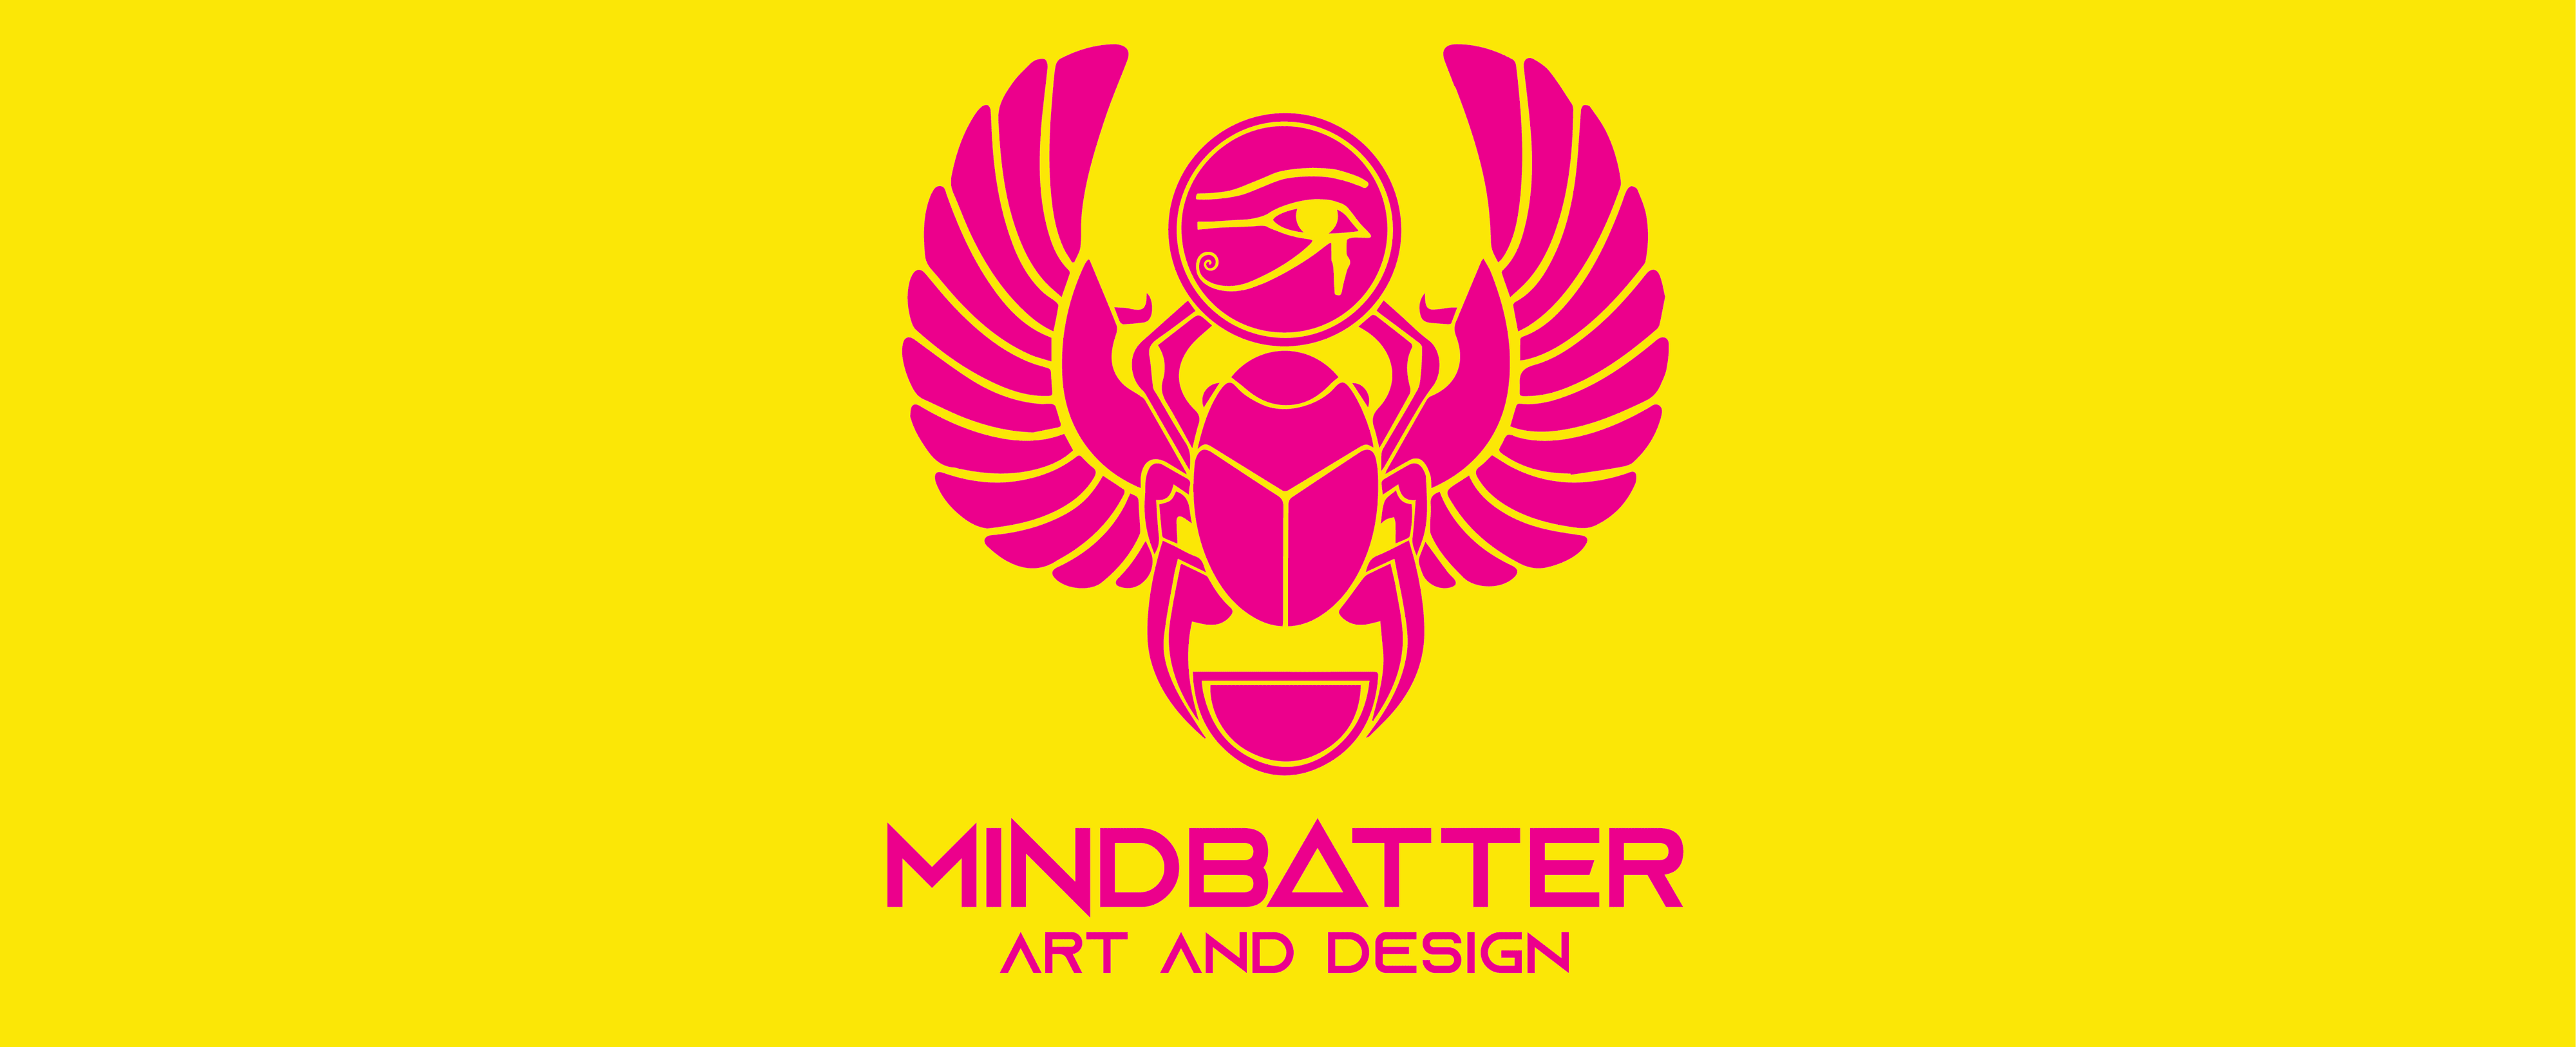 Mindbatter banner